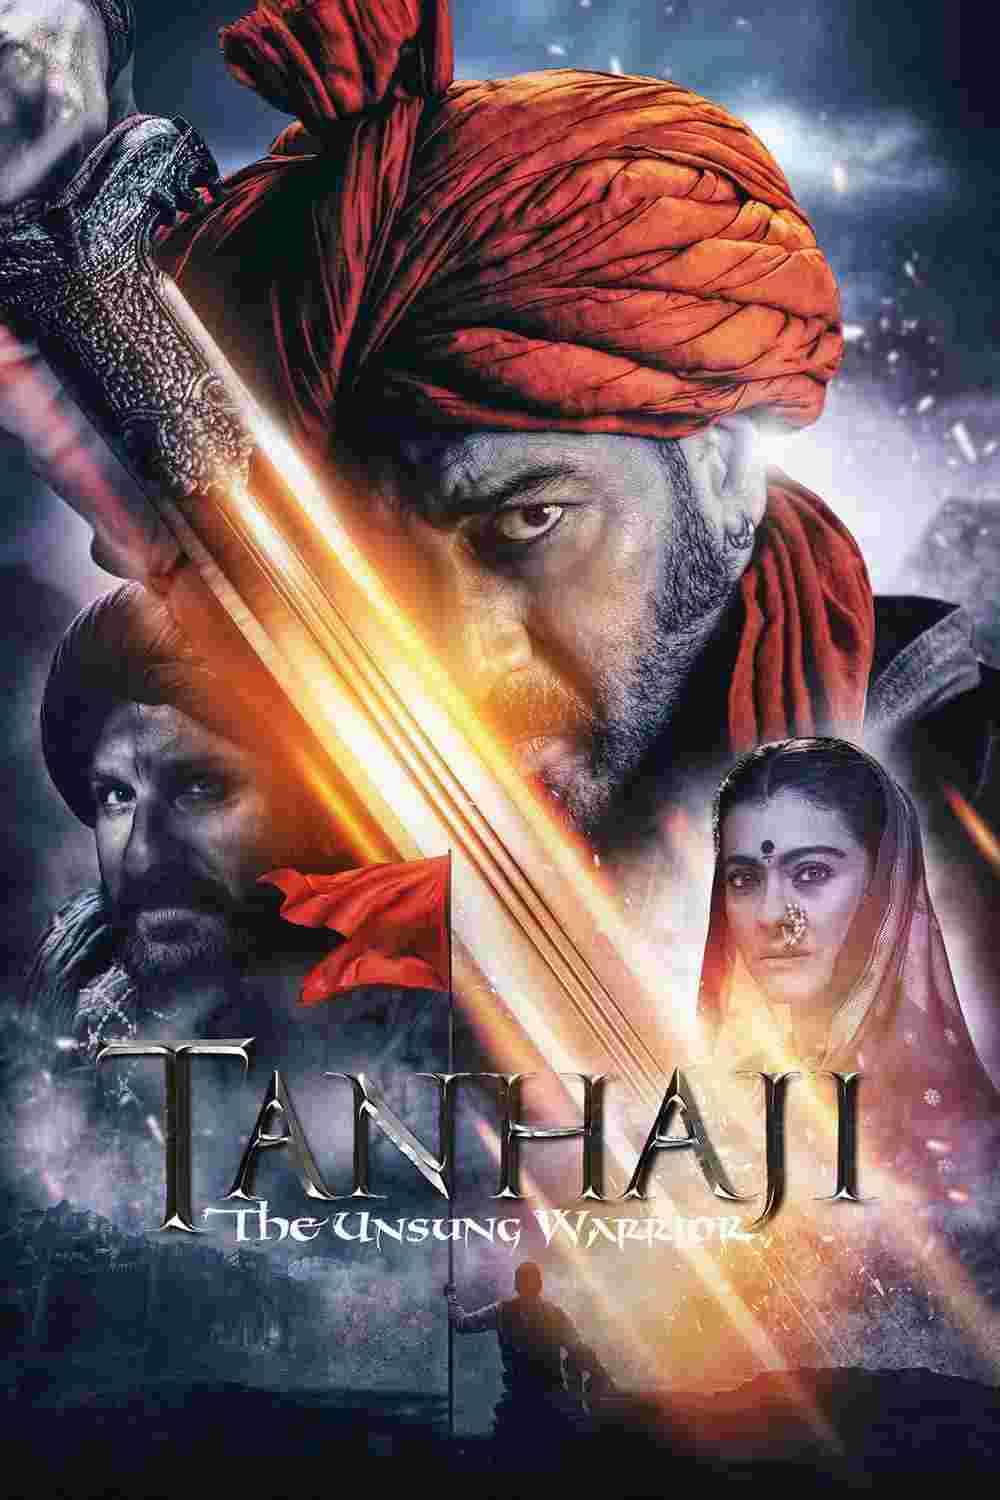 Tanhaji: The Unsung Warrior (2020) Ajay Devgn